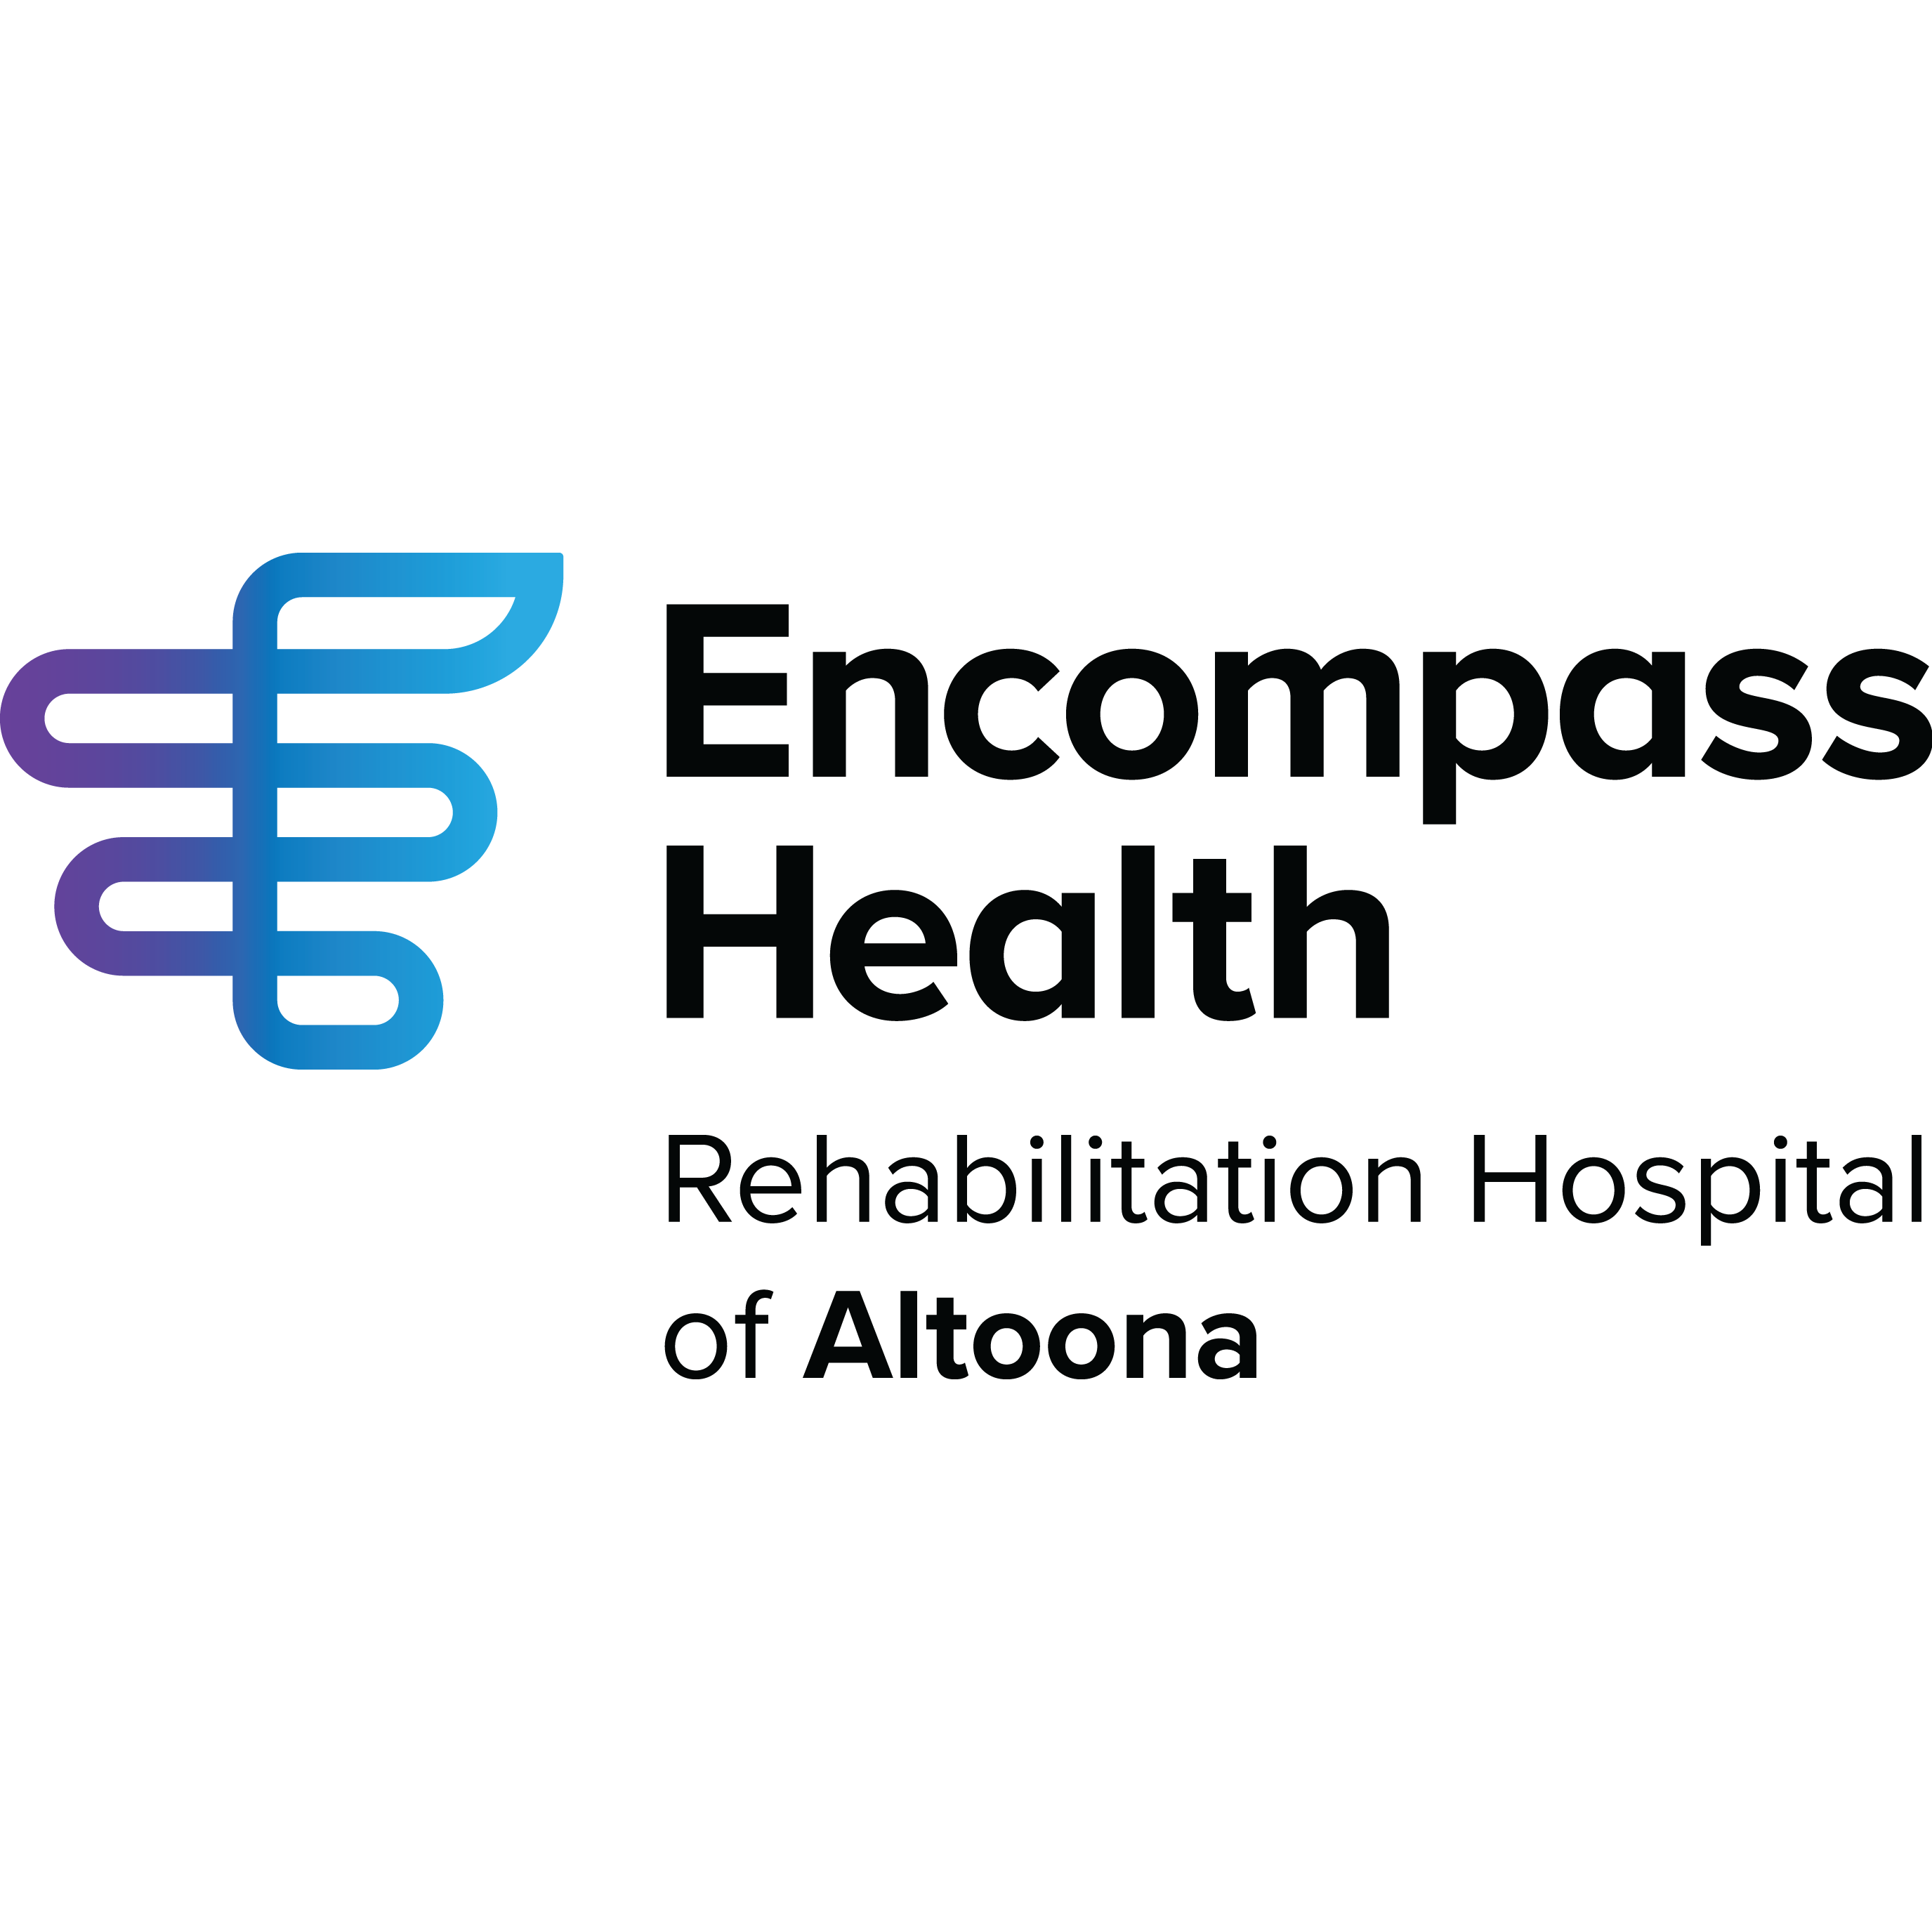 Encompass Health Rehabilitation Hospital of Altoona